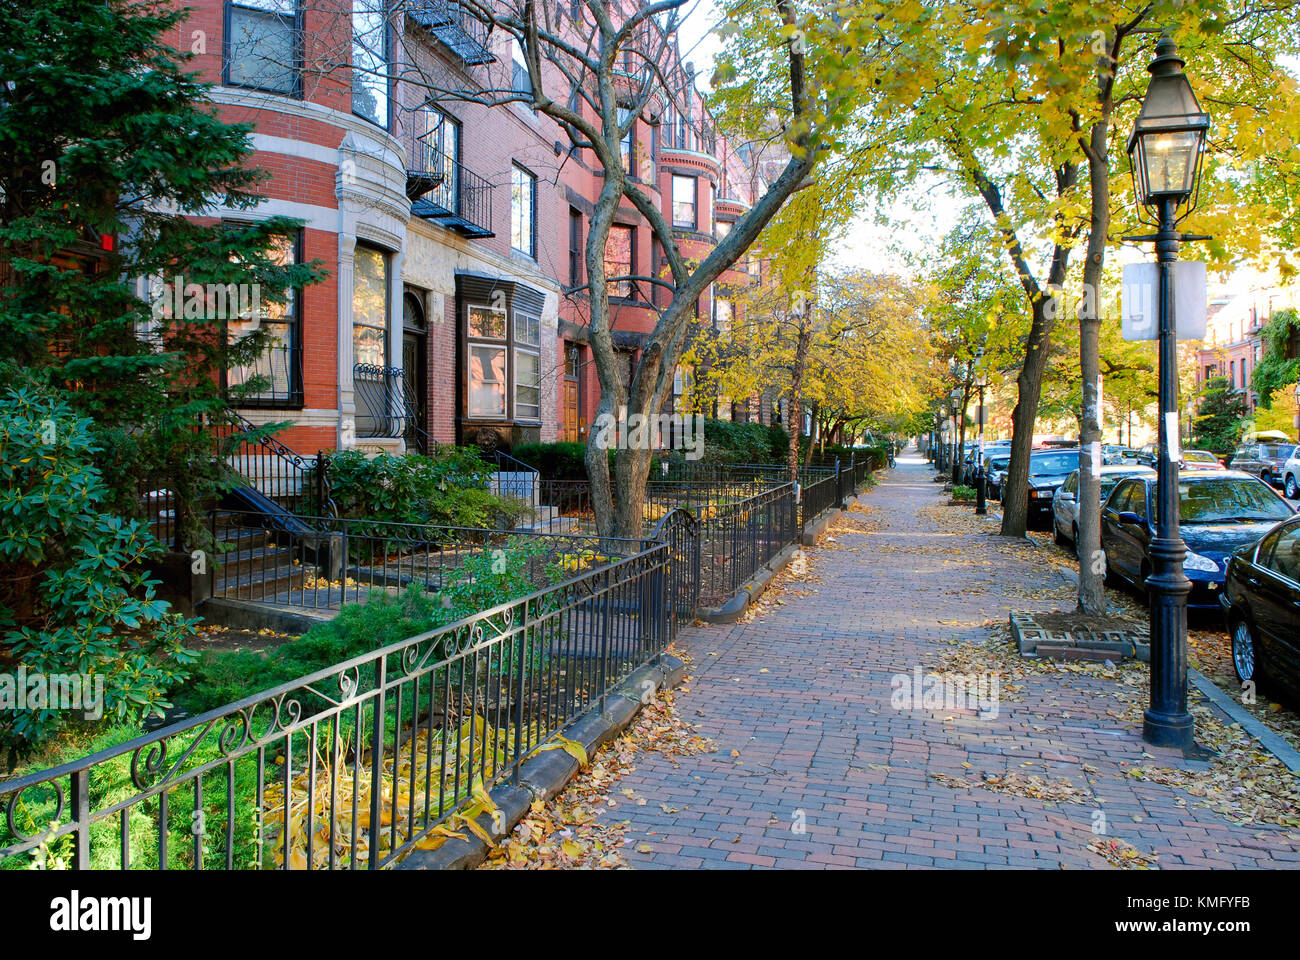 Back Bay Boston in the fall. Victorian townhouses, iron fences, brick sidewalk, street lamps, fall foliage. Stock Photo